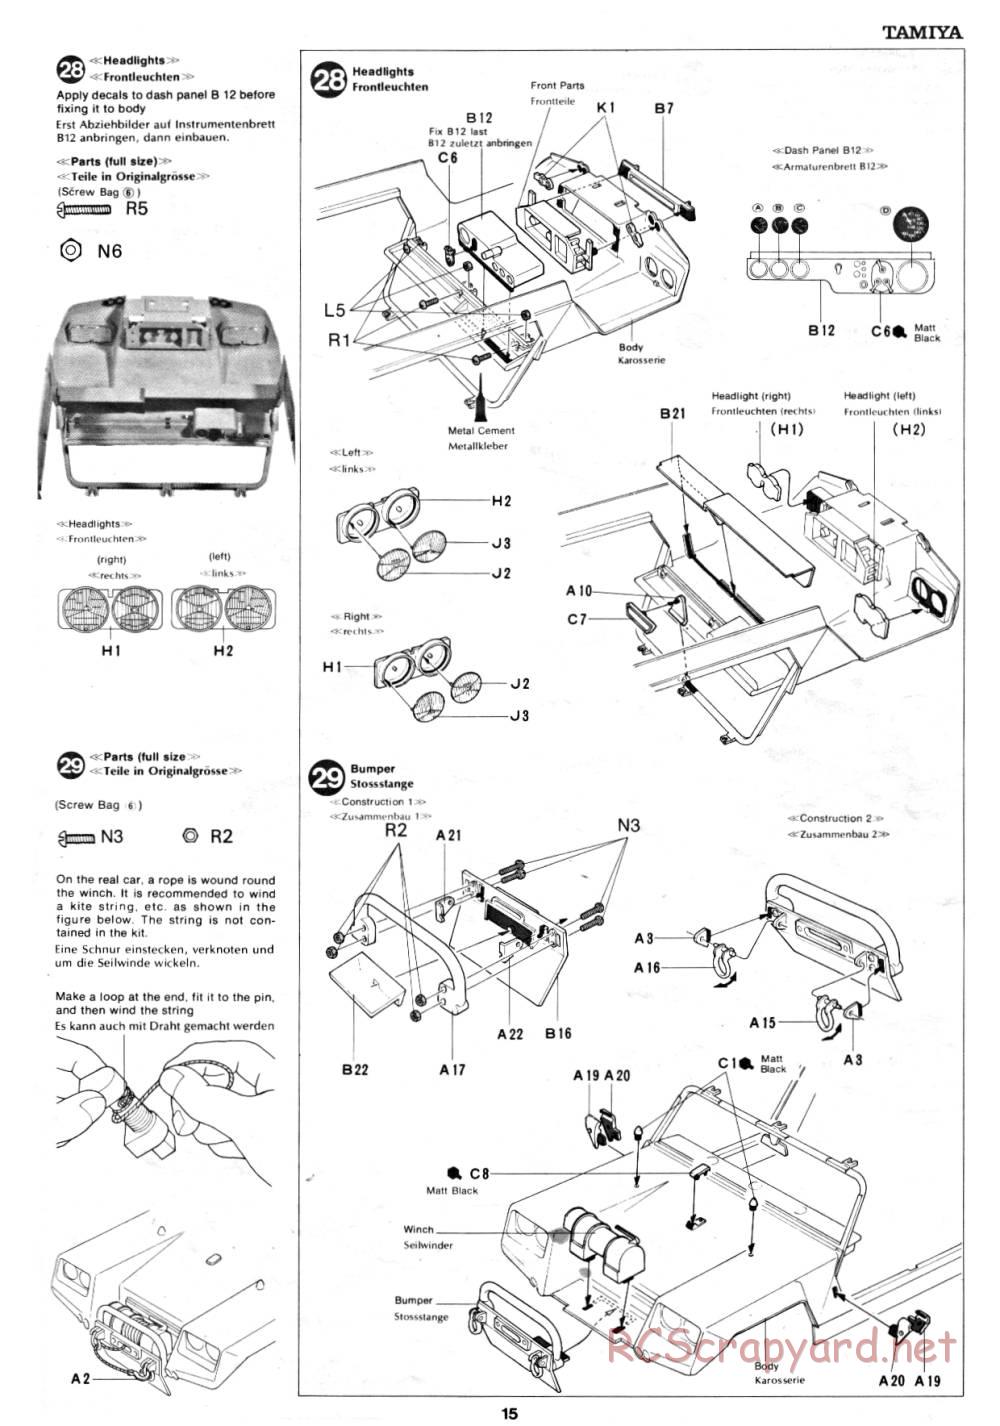 Tamiya - Lamborghini Cheetah - 58007 - Manual - Page 15